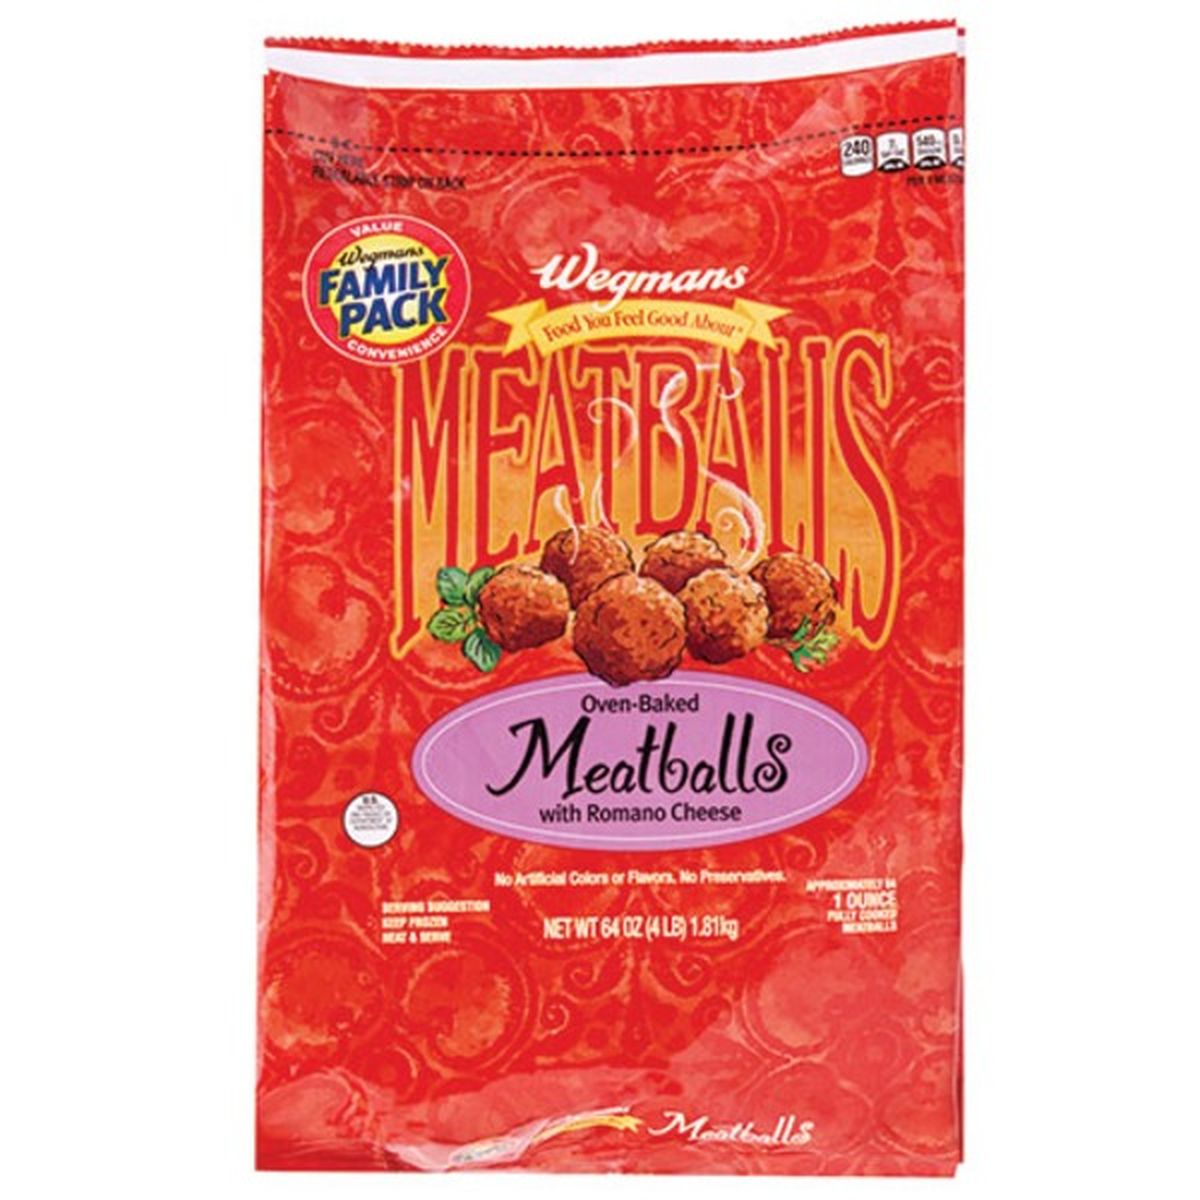 Calories in Wegmans Oven-Baked Meatballs, FAMILY PACK